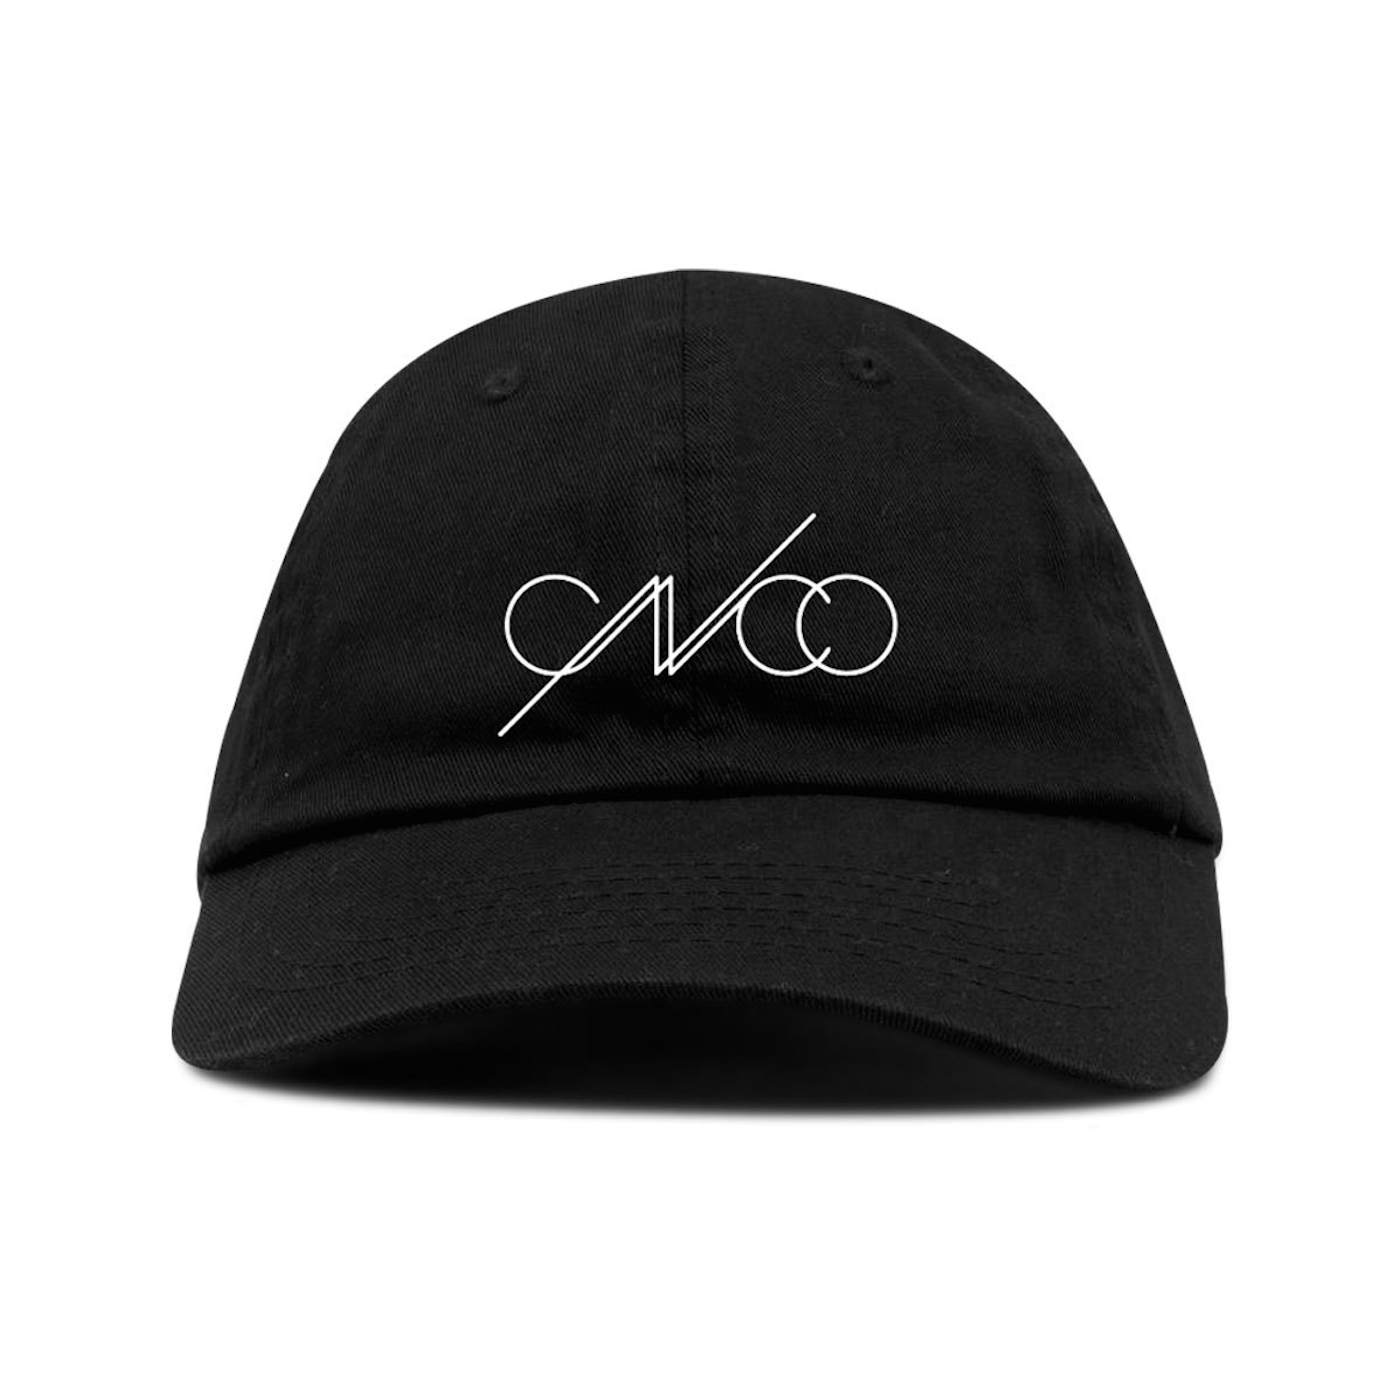 CNCO - World Tour Black Dad Hat